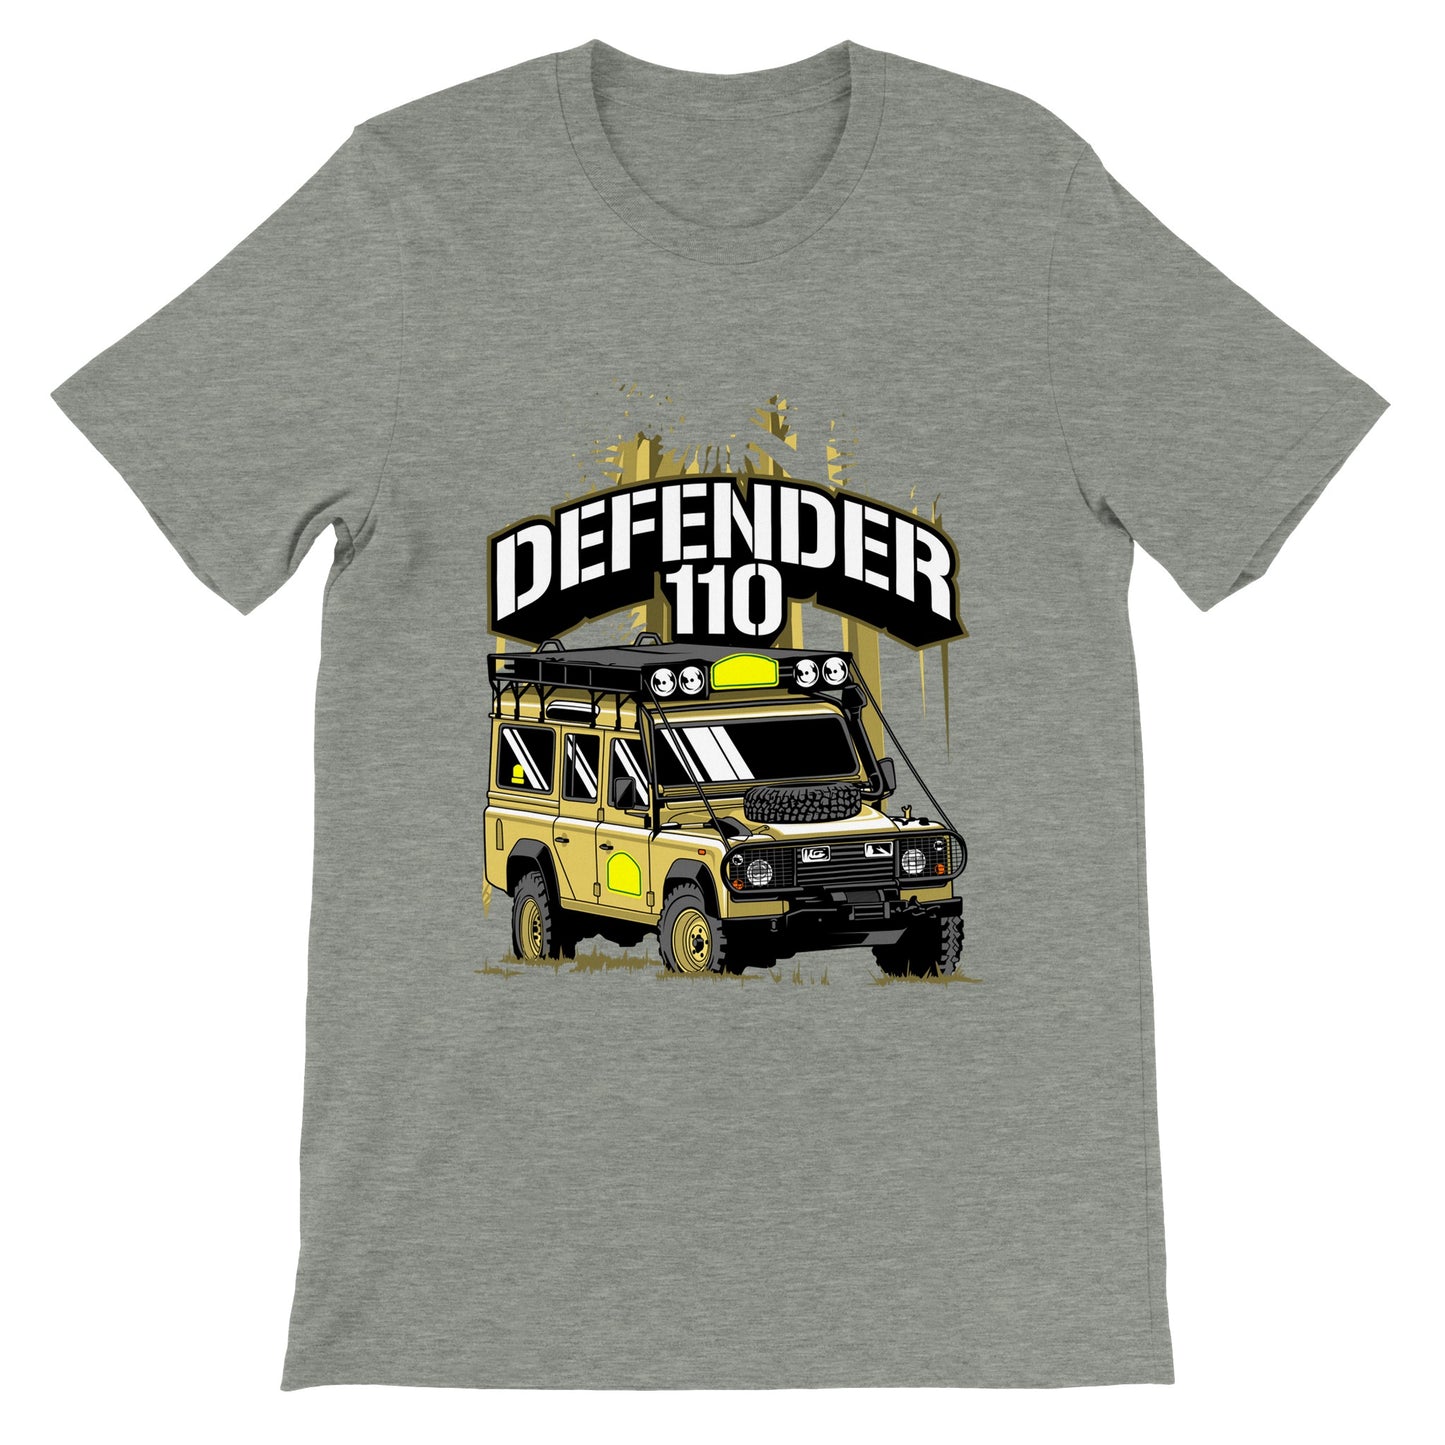 Car T-shirt - The Defender 110 - Artwork - Premium Unisex T-shirt